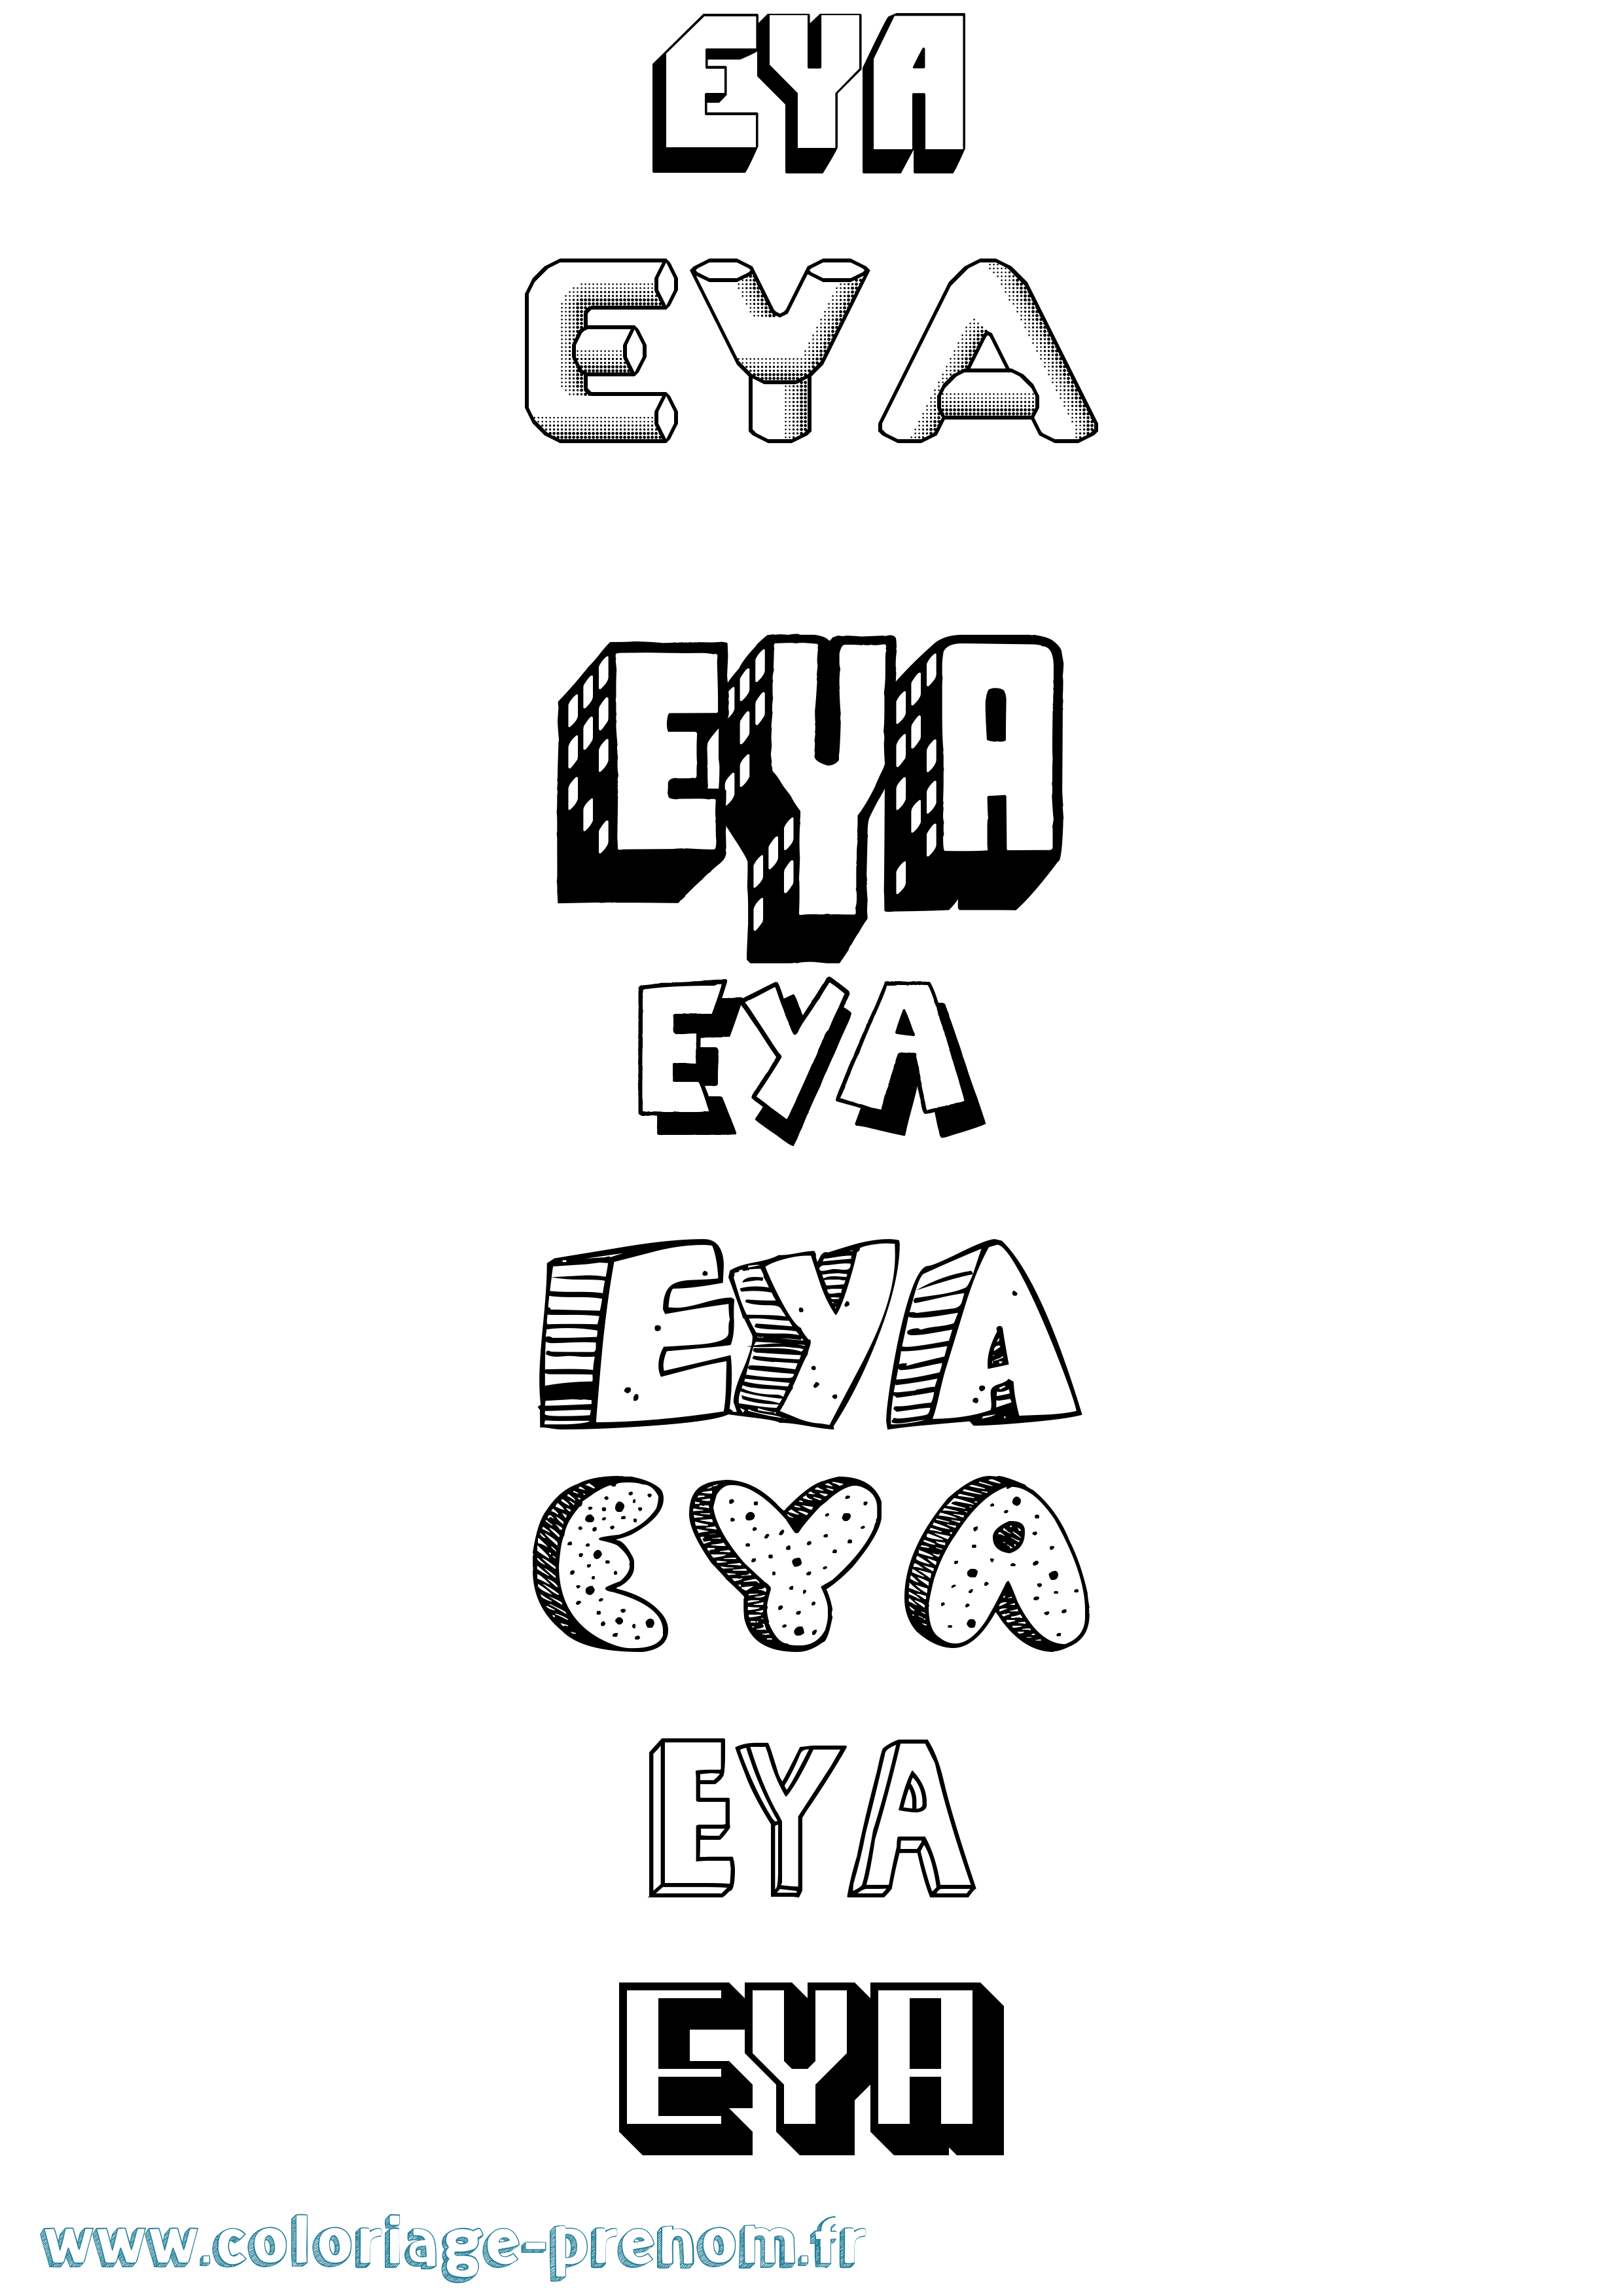 Coloriage prénom Eya